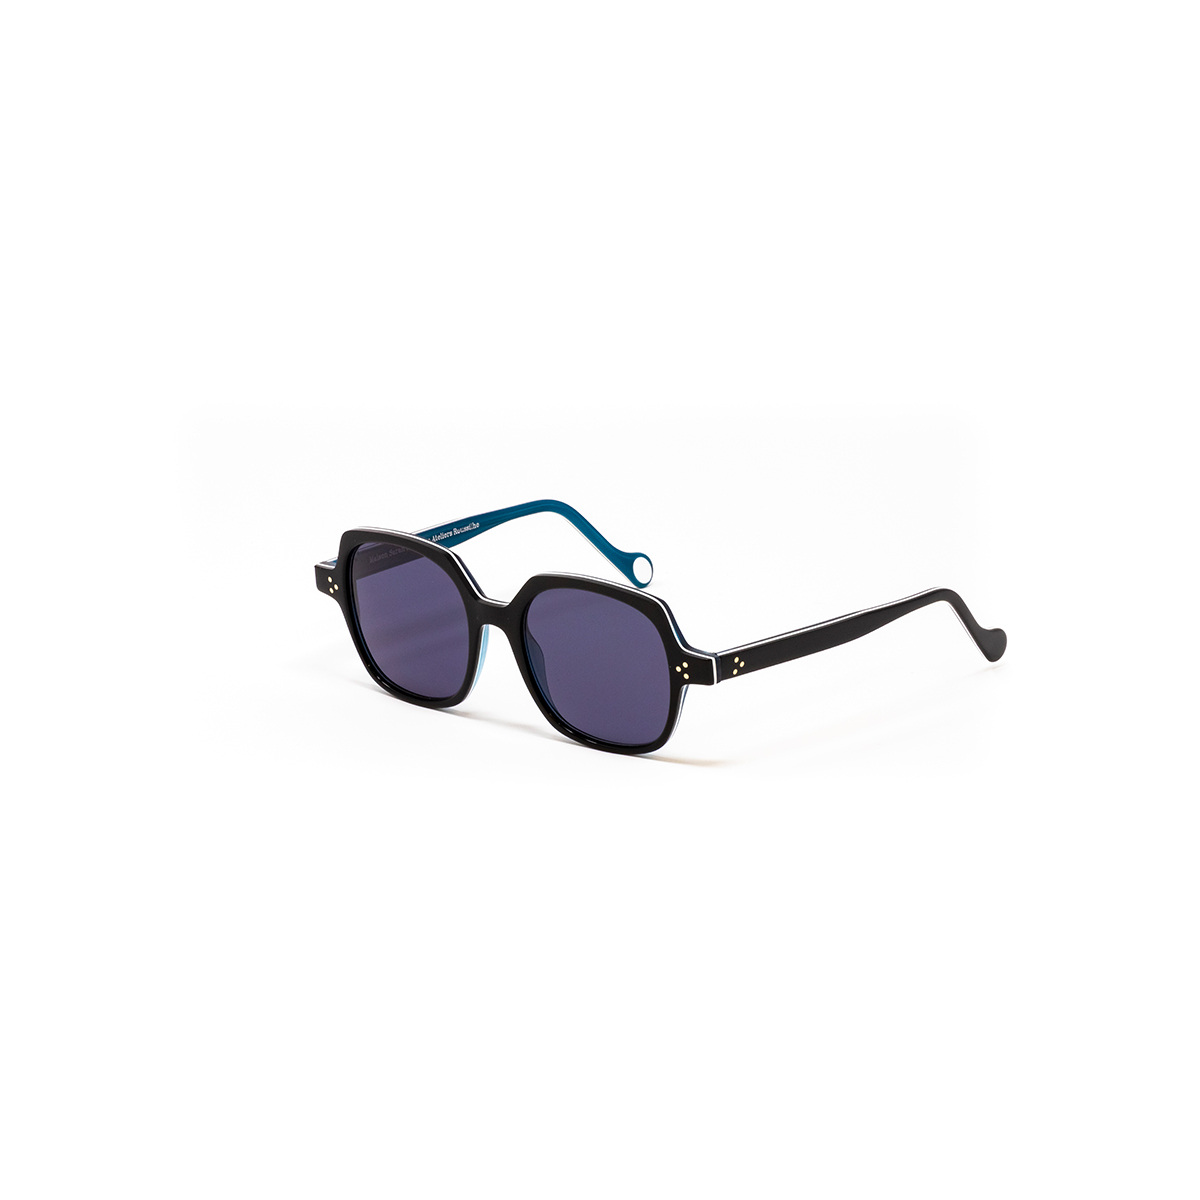 Sunglasses Thyra, Various Colours - Size 52-18 - Organic acetate - image 2